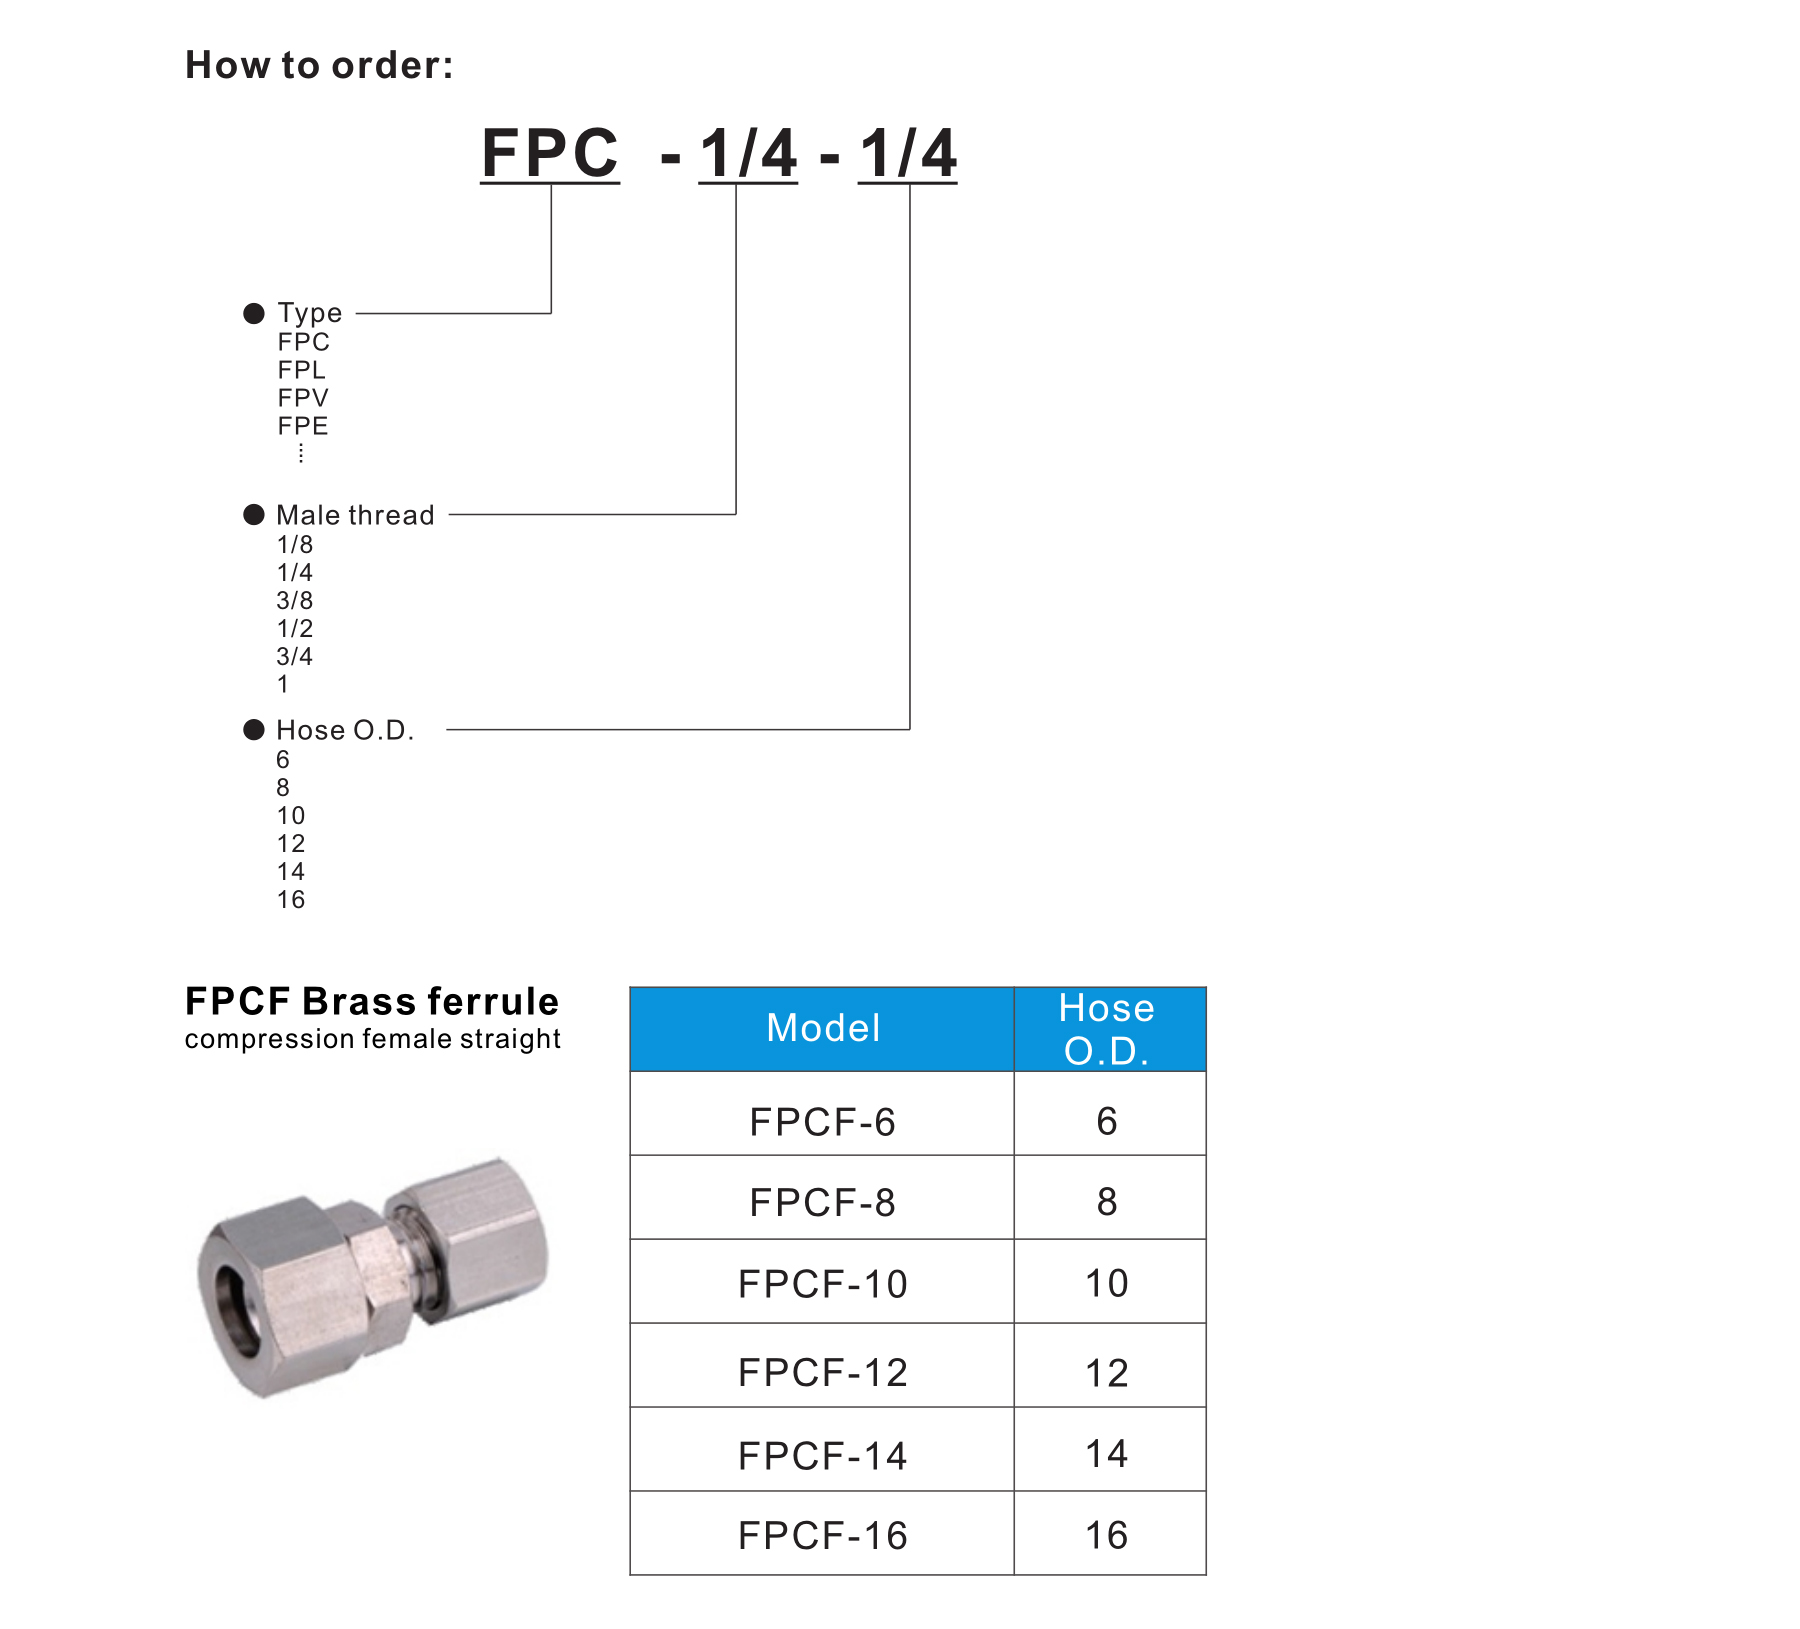 FPCF Brass ferrule compression female straight